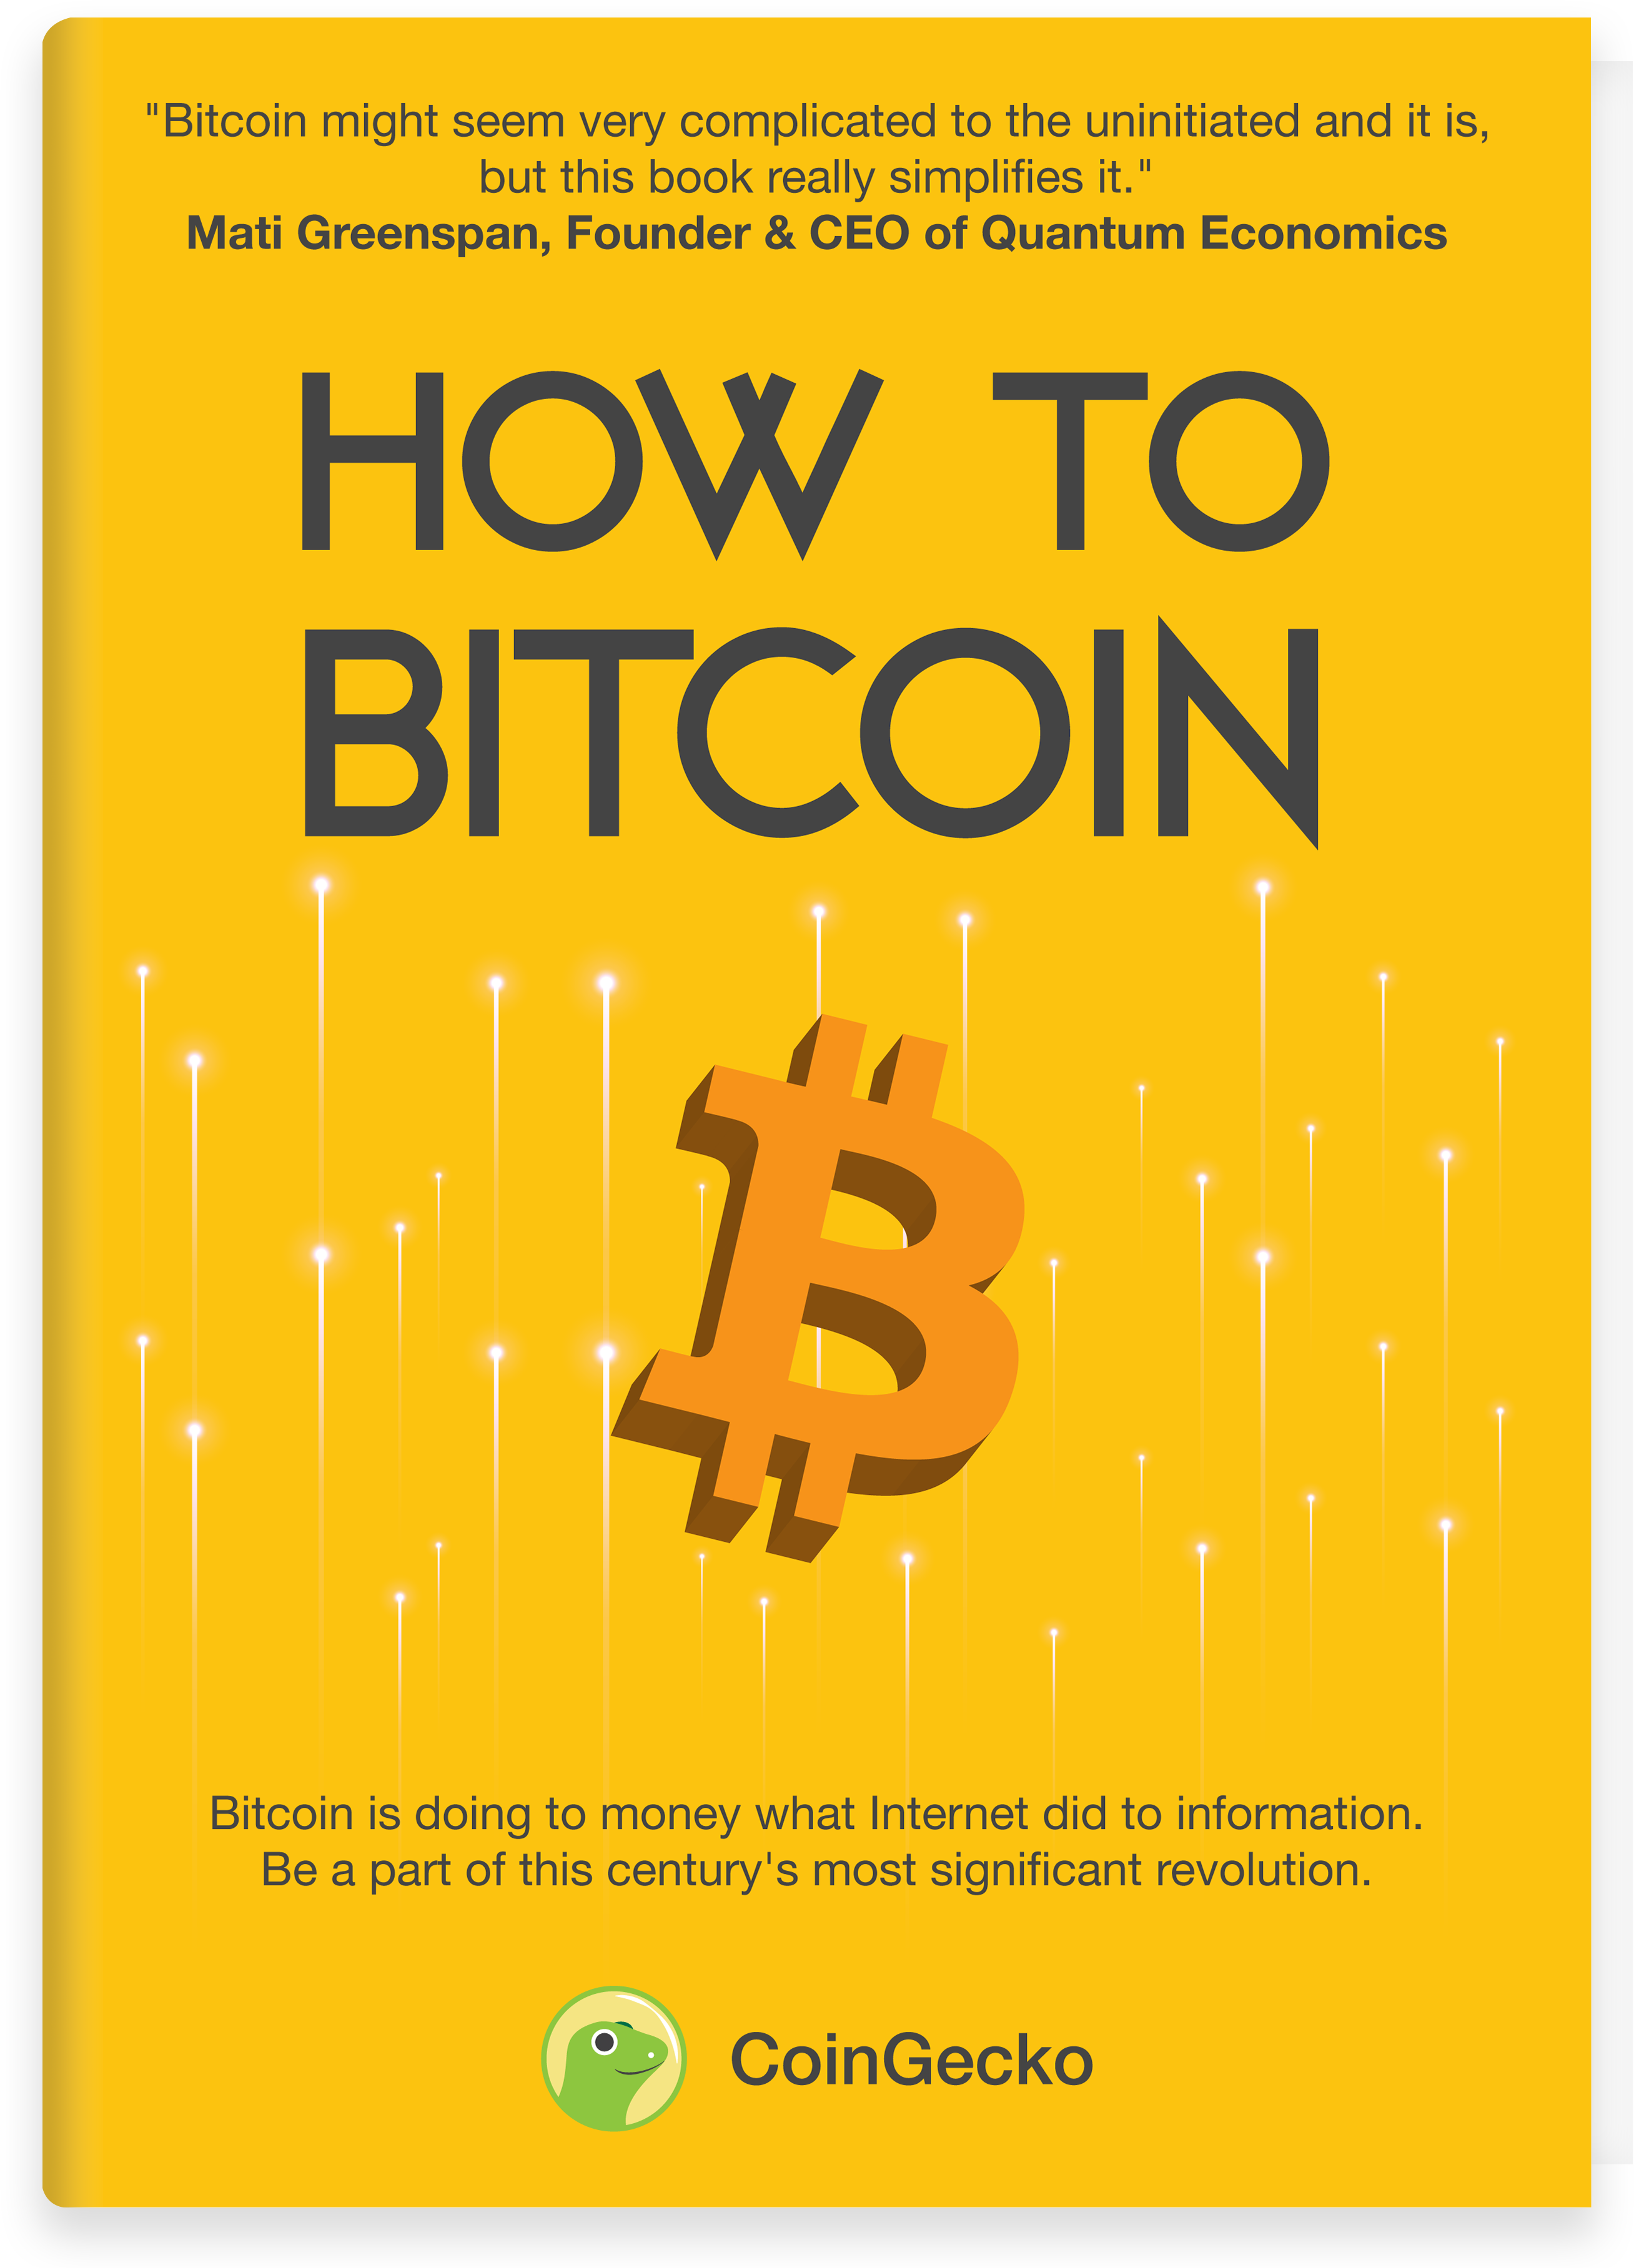 bitcoin book